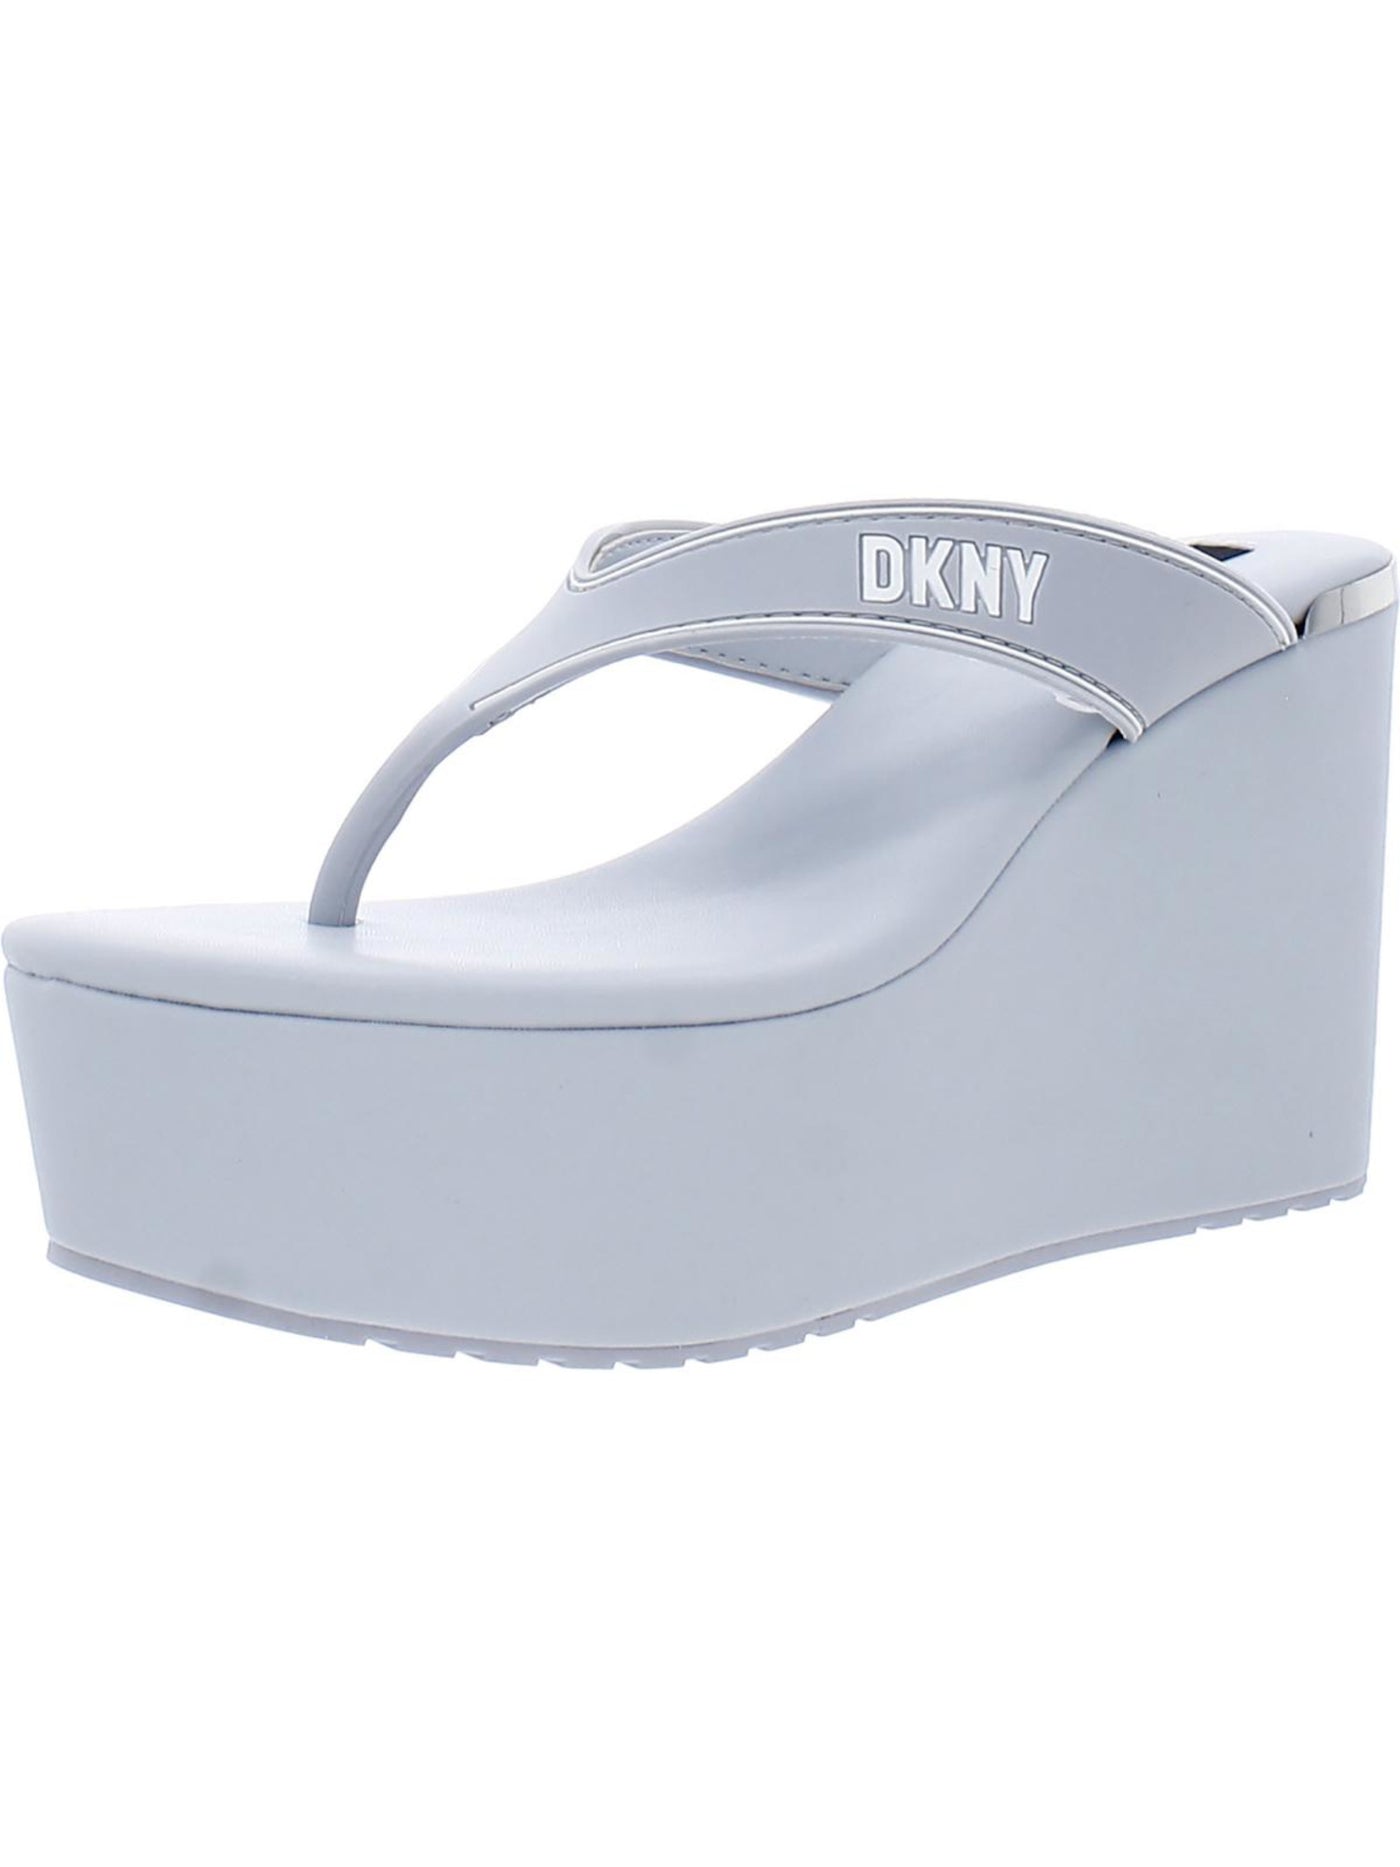 DKNY Womens Light Blue Metallic 2" Platform Padded Trina Round Toe Wedge Slip On Thong Sandals Shoes 10 M